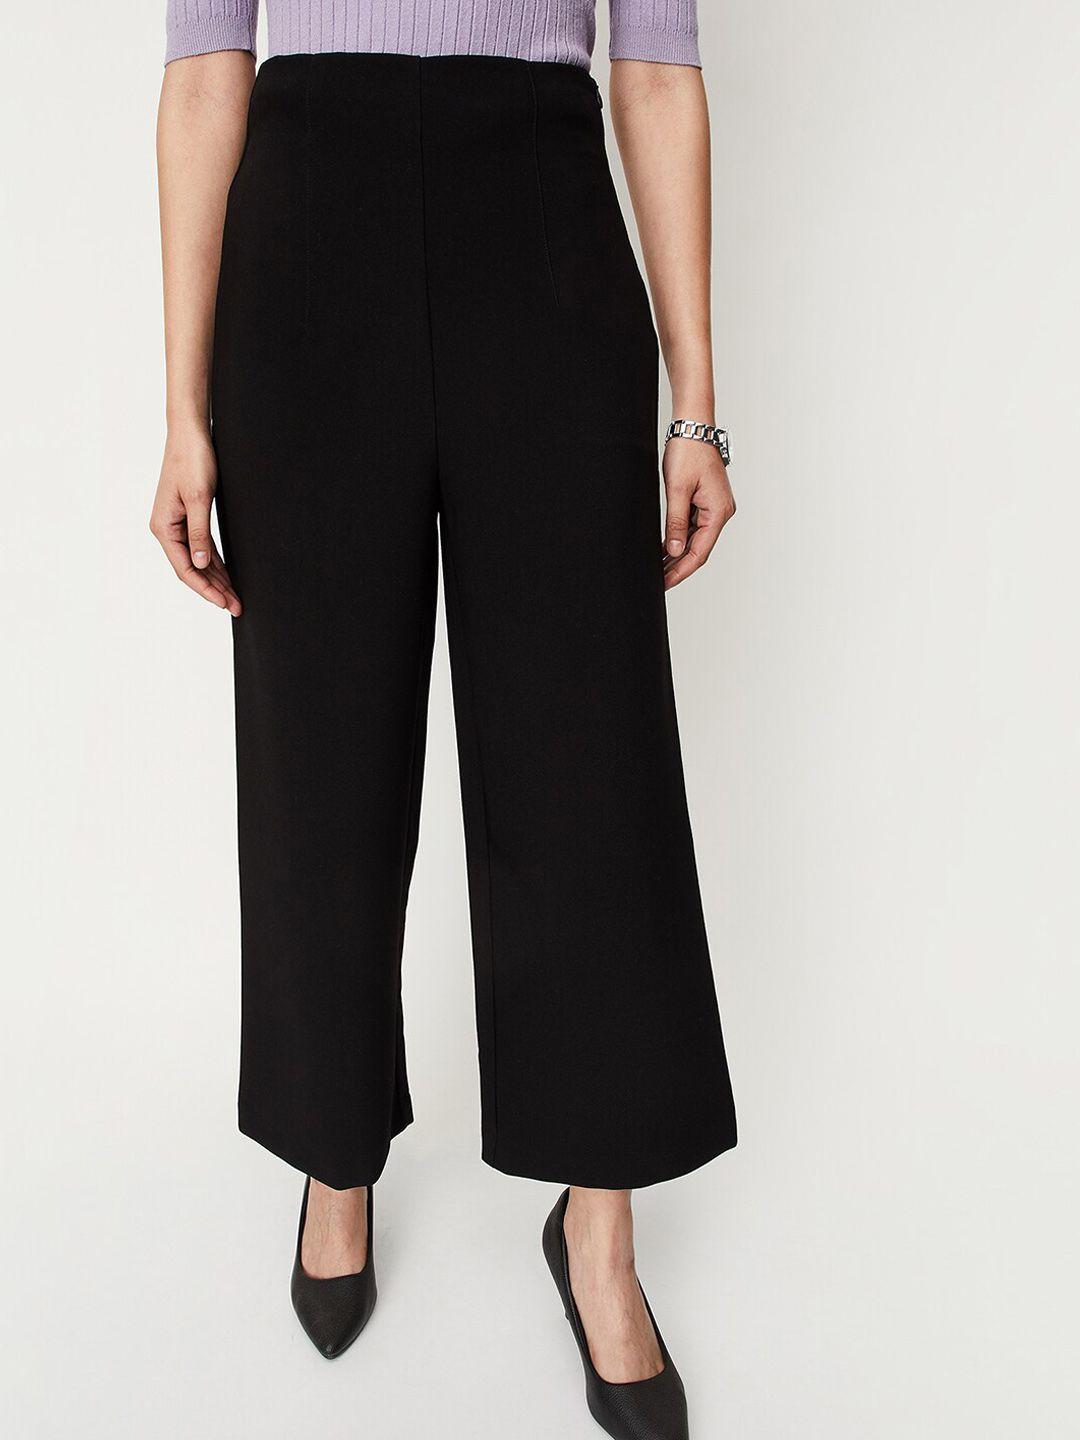 max-women-high-rise-plain-parallel-trousers